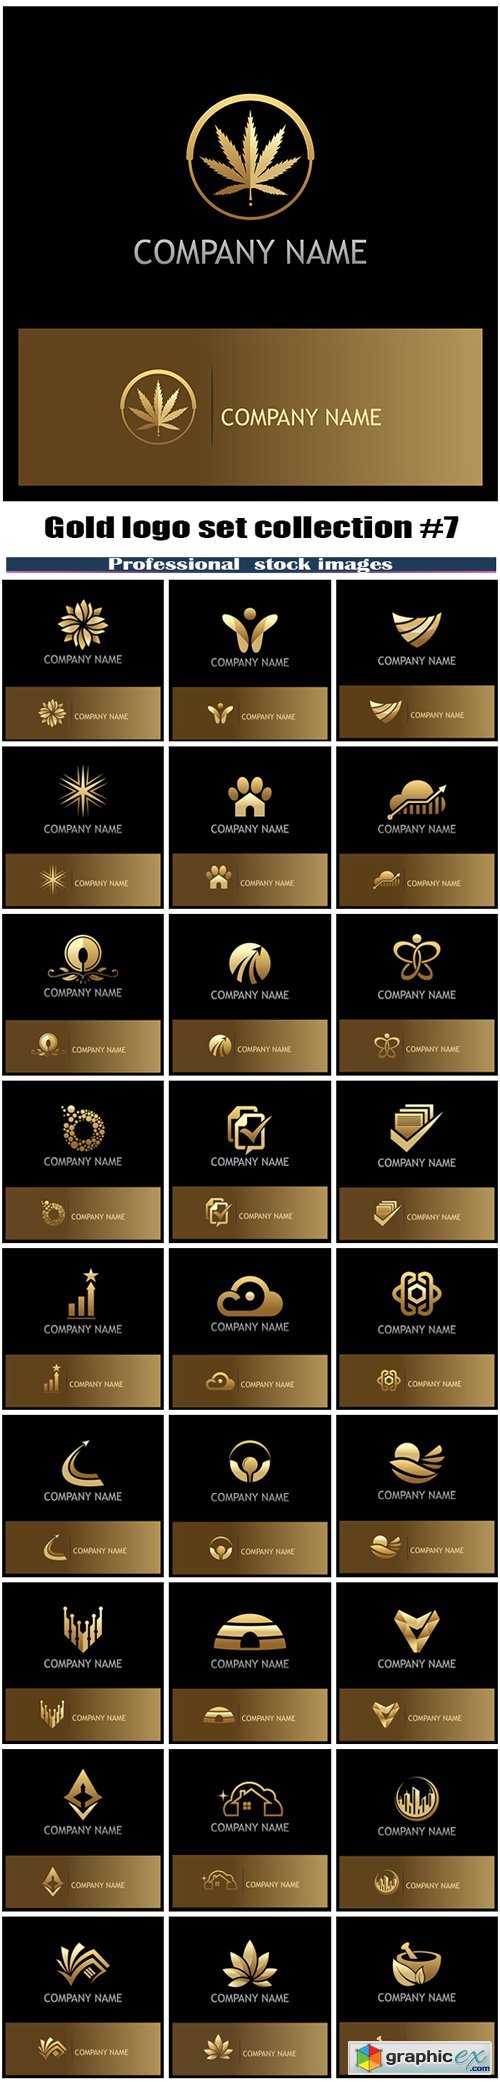 Gold logo set collection #7